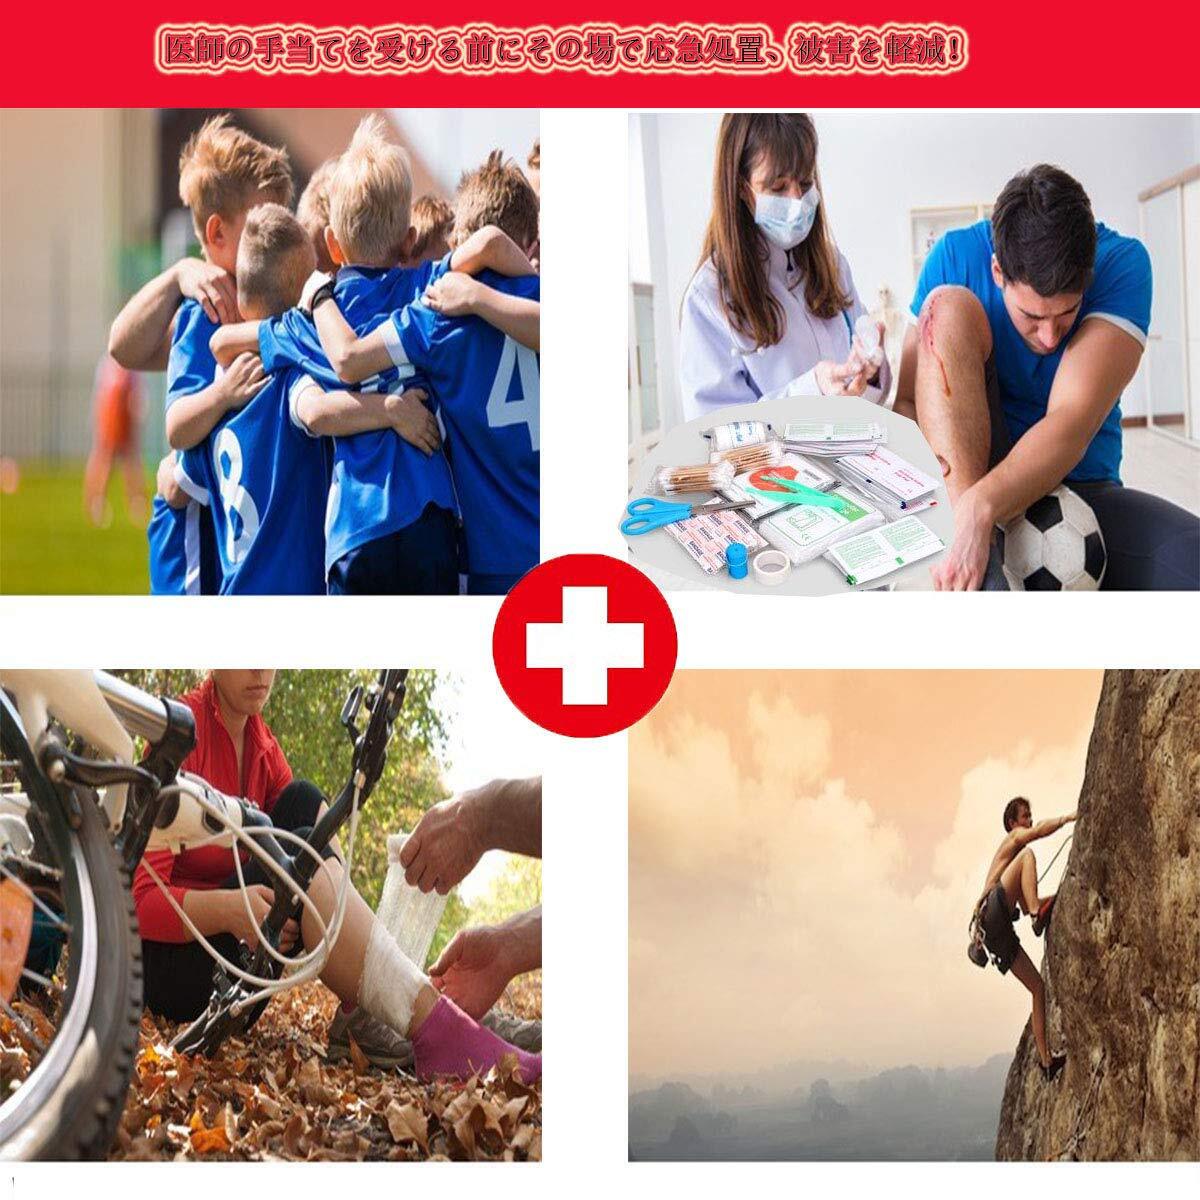  first aid kit disaster mountain climbing outdoor urgent emergency first-aid kit first-aid set 